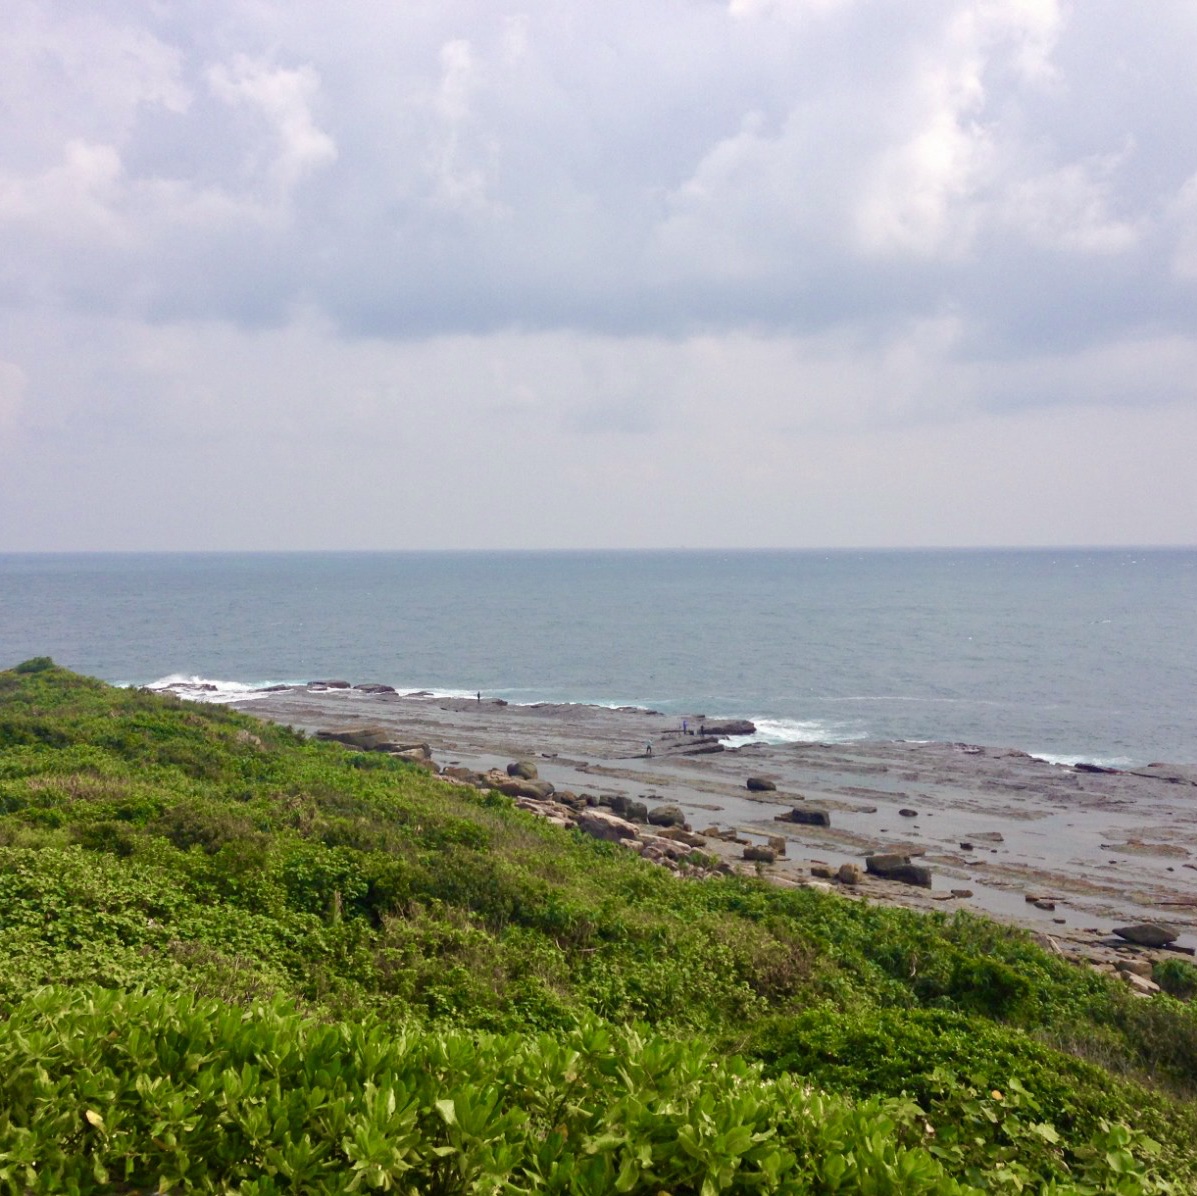 Longdong Bay at Northeast coast of Taiwan (New Taipei City and